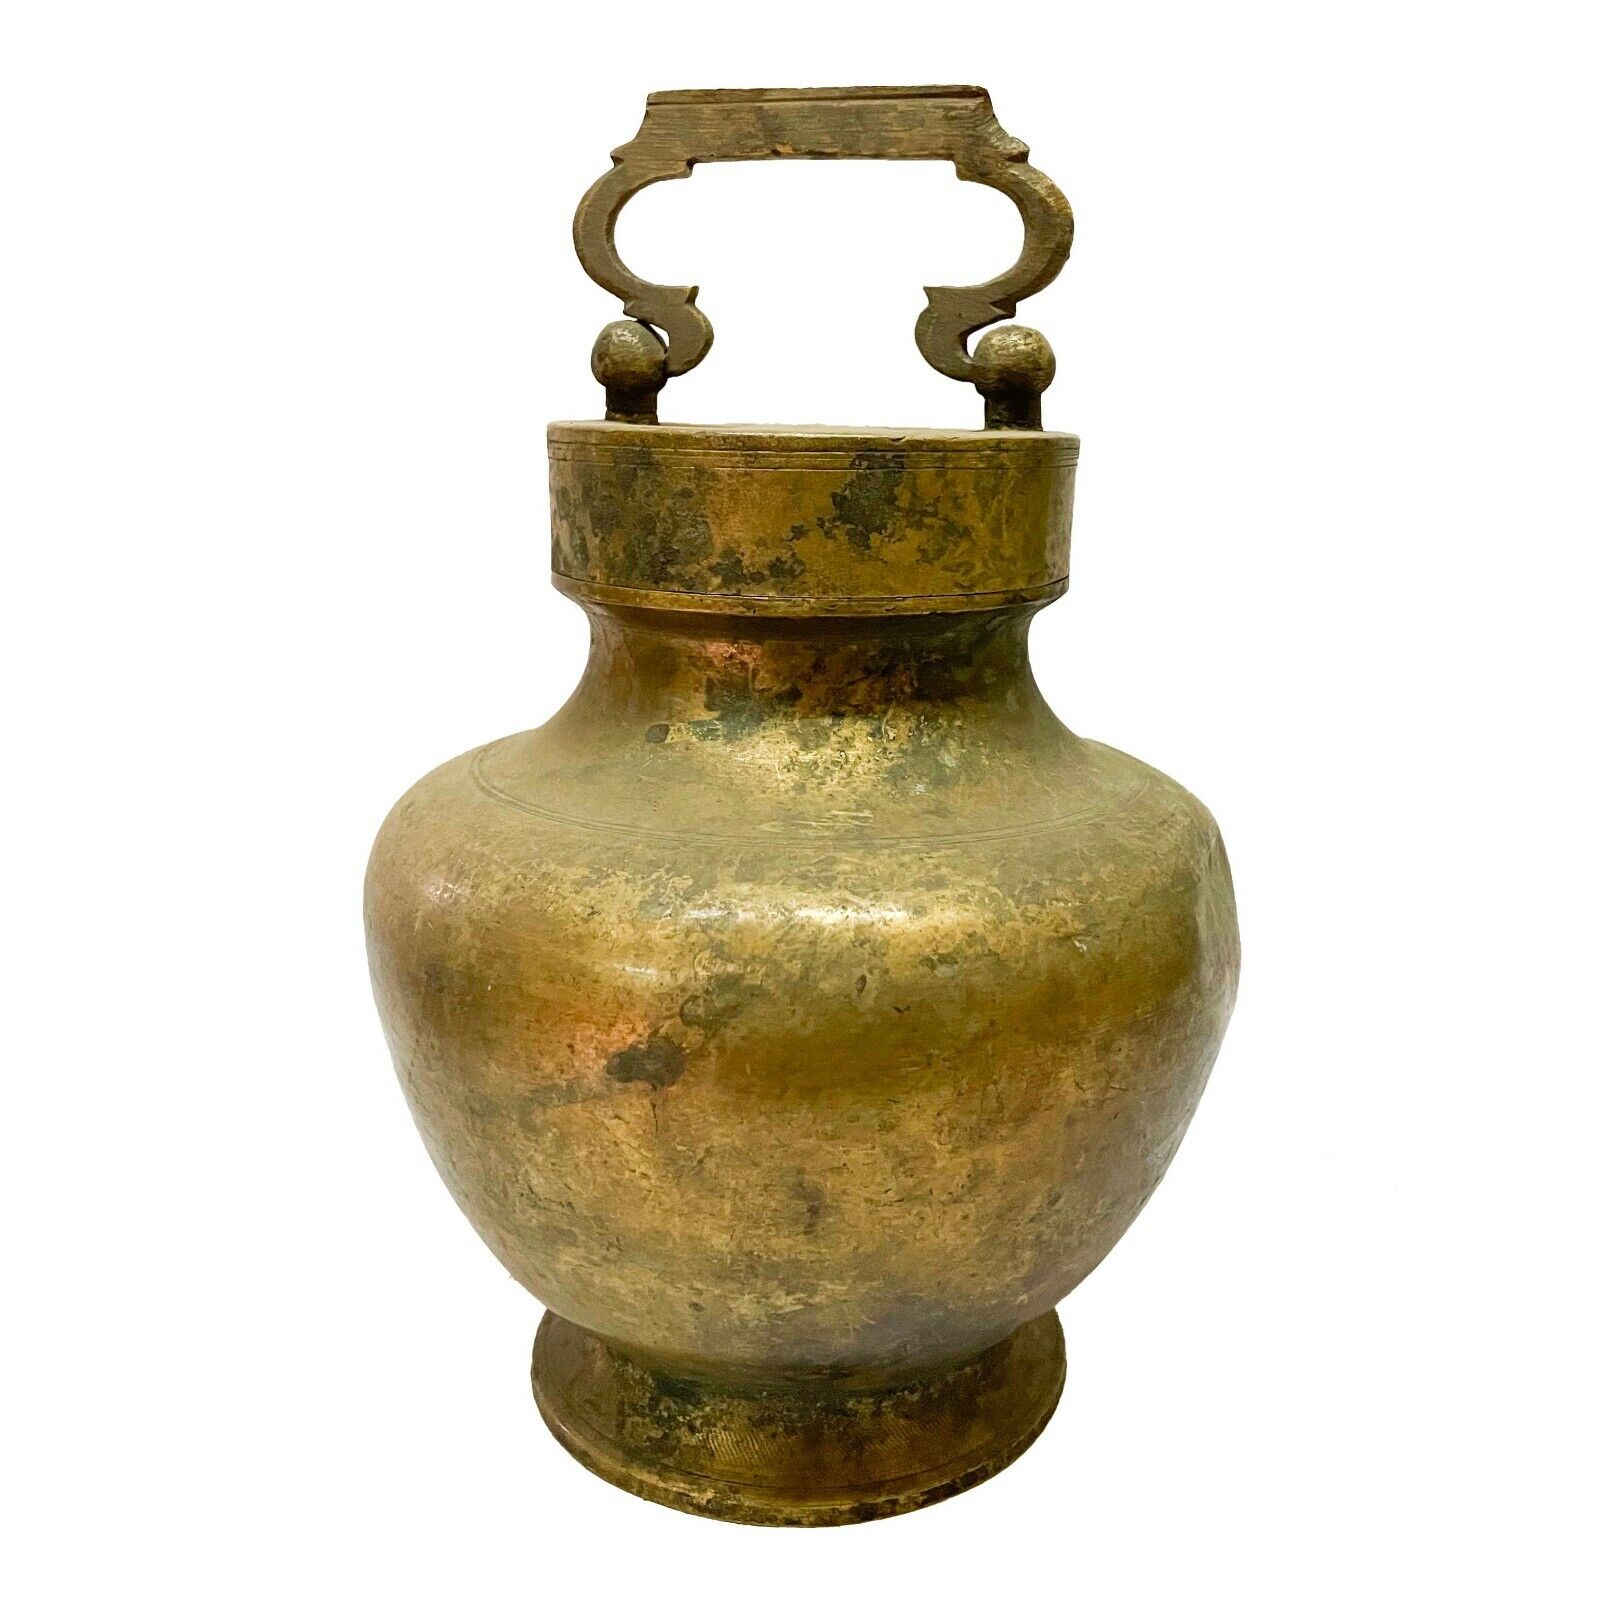 80+ Years Old Genuine Handmade Brass Tibetan Vase Vessel from Nepal Collectible